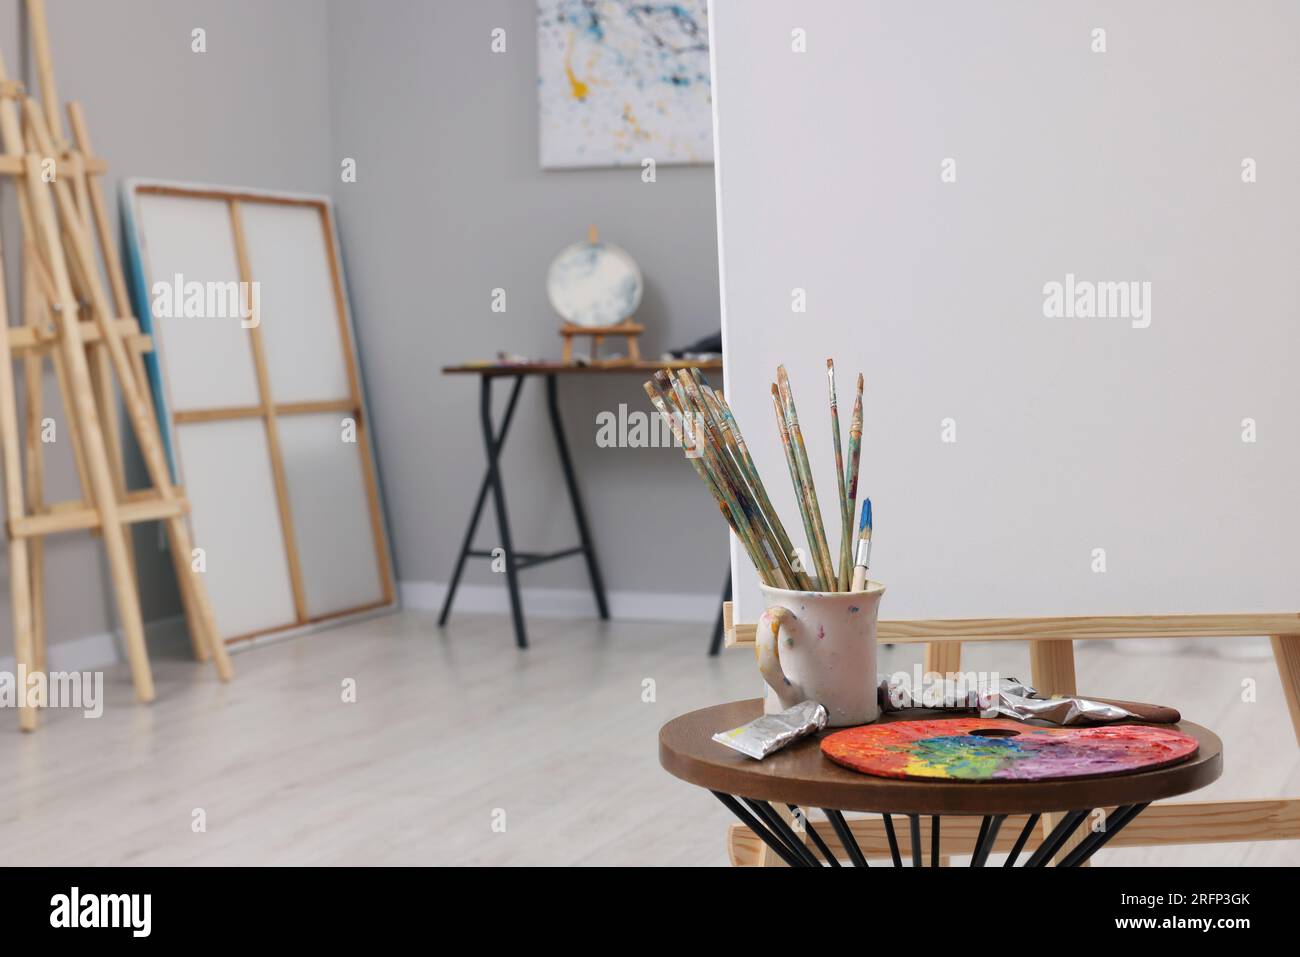 Caballete para niños fotografías e imágenes de alta resolución - Alamy